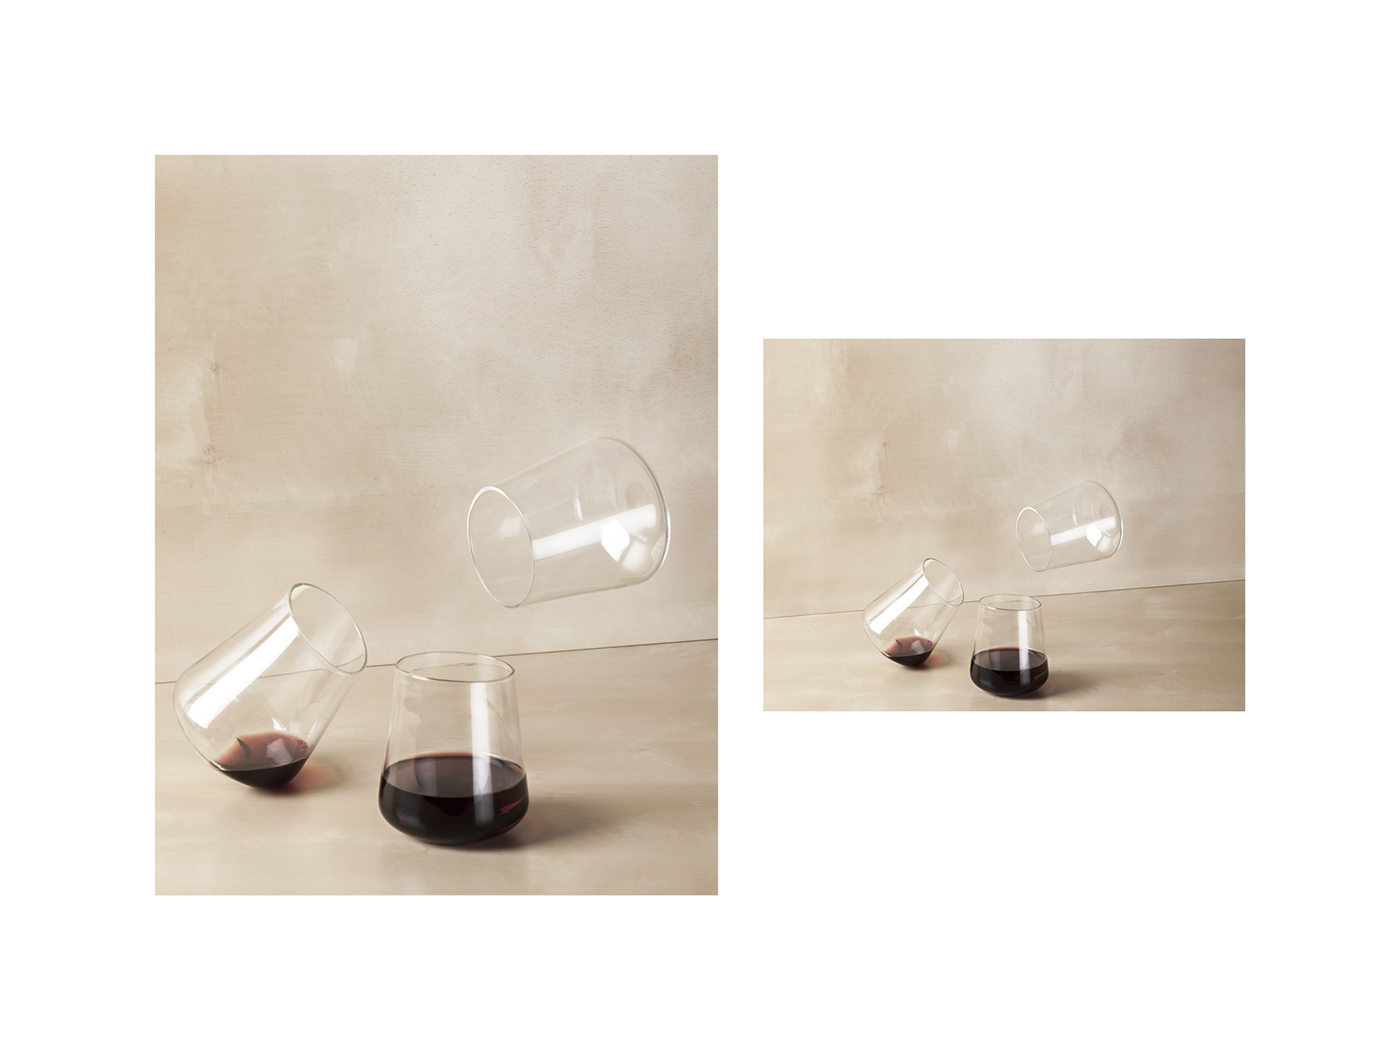 product wood Flying floating industrial photoshoot still life bodegon design glass handmade nice tea